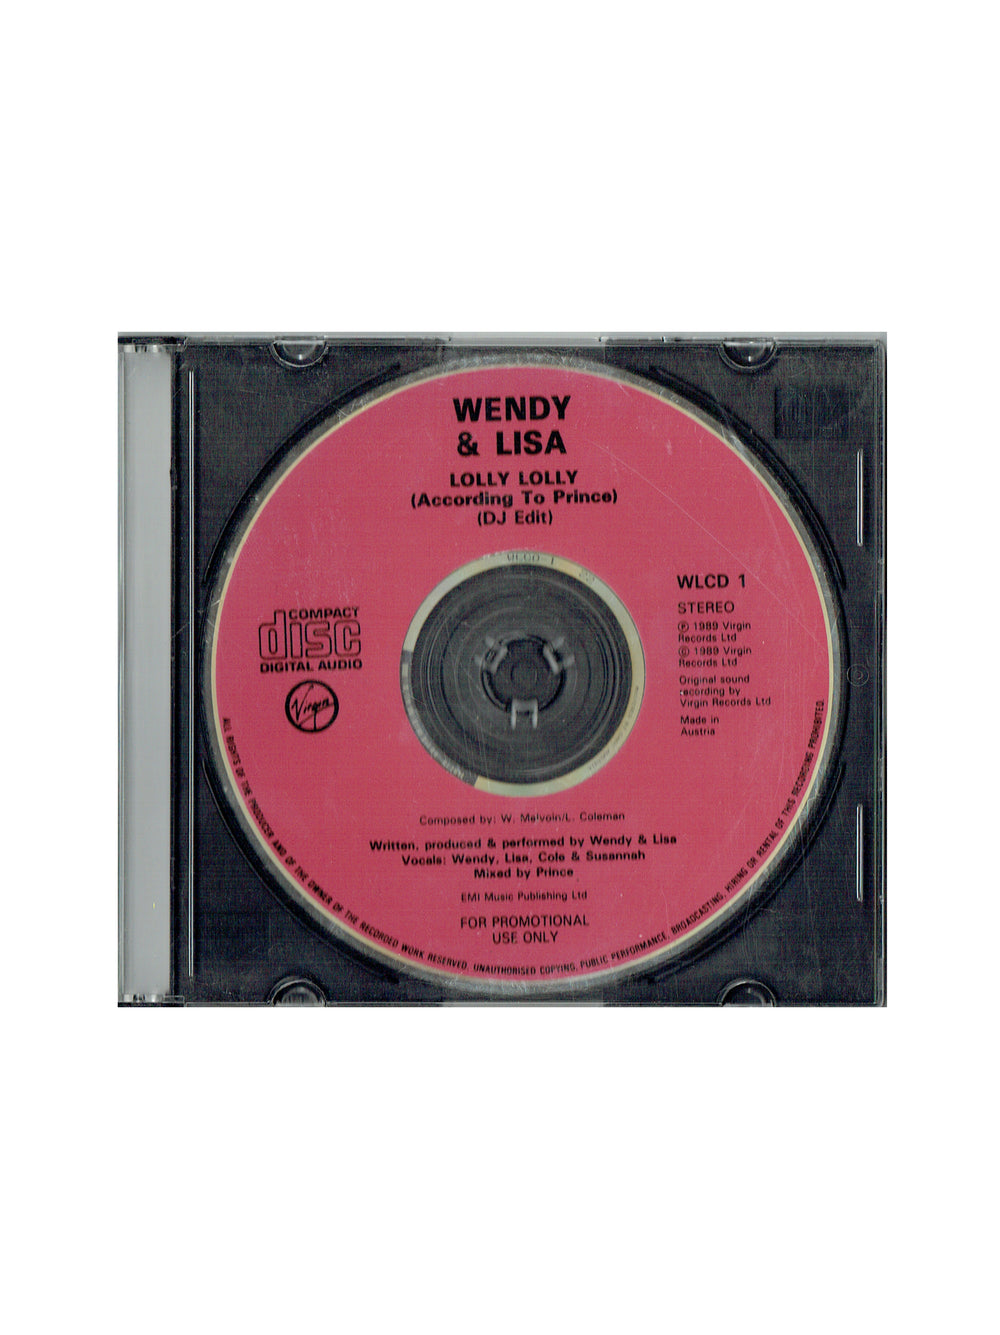 Prince – Wendy & Lisa Lolly Lolly According To Prince CD Single EU Promo Preloved: 1989